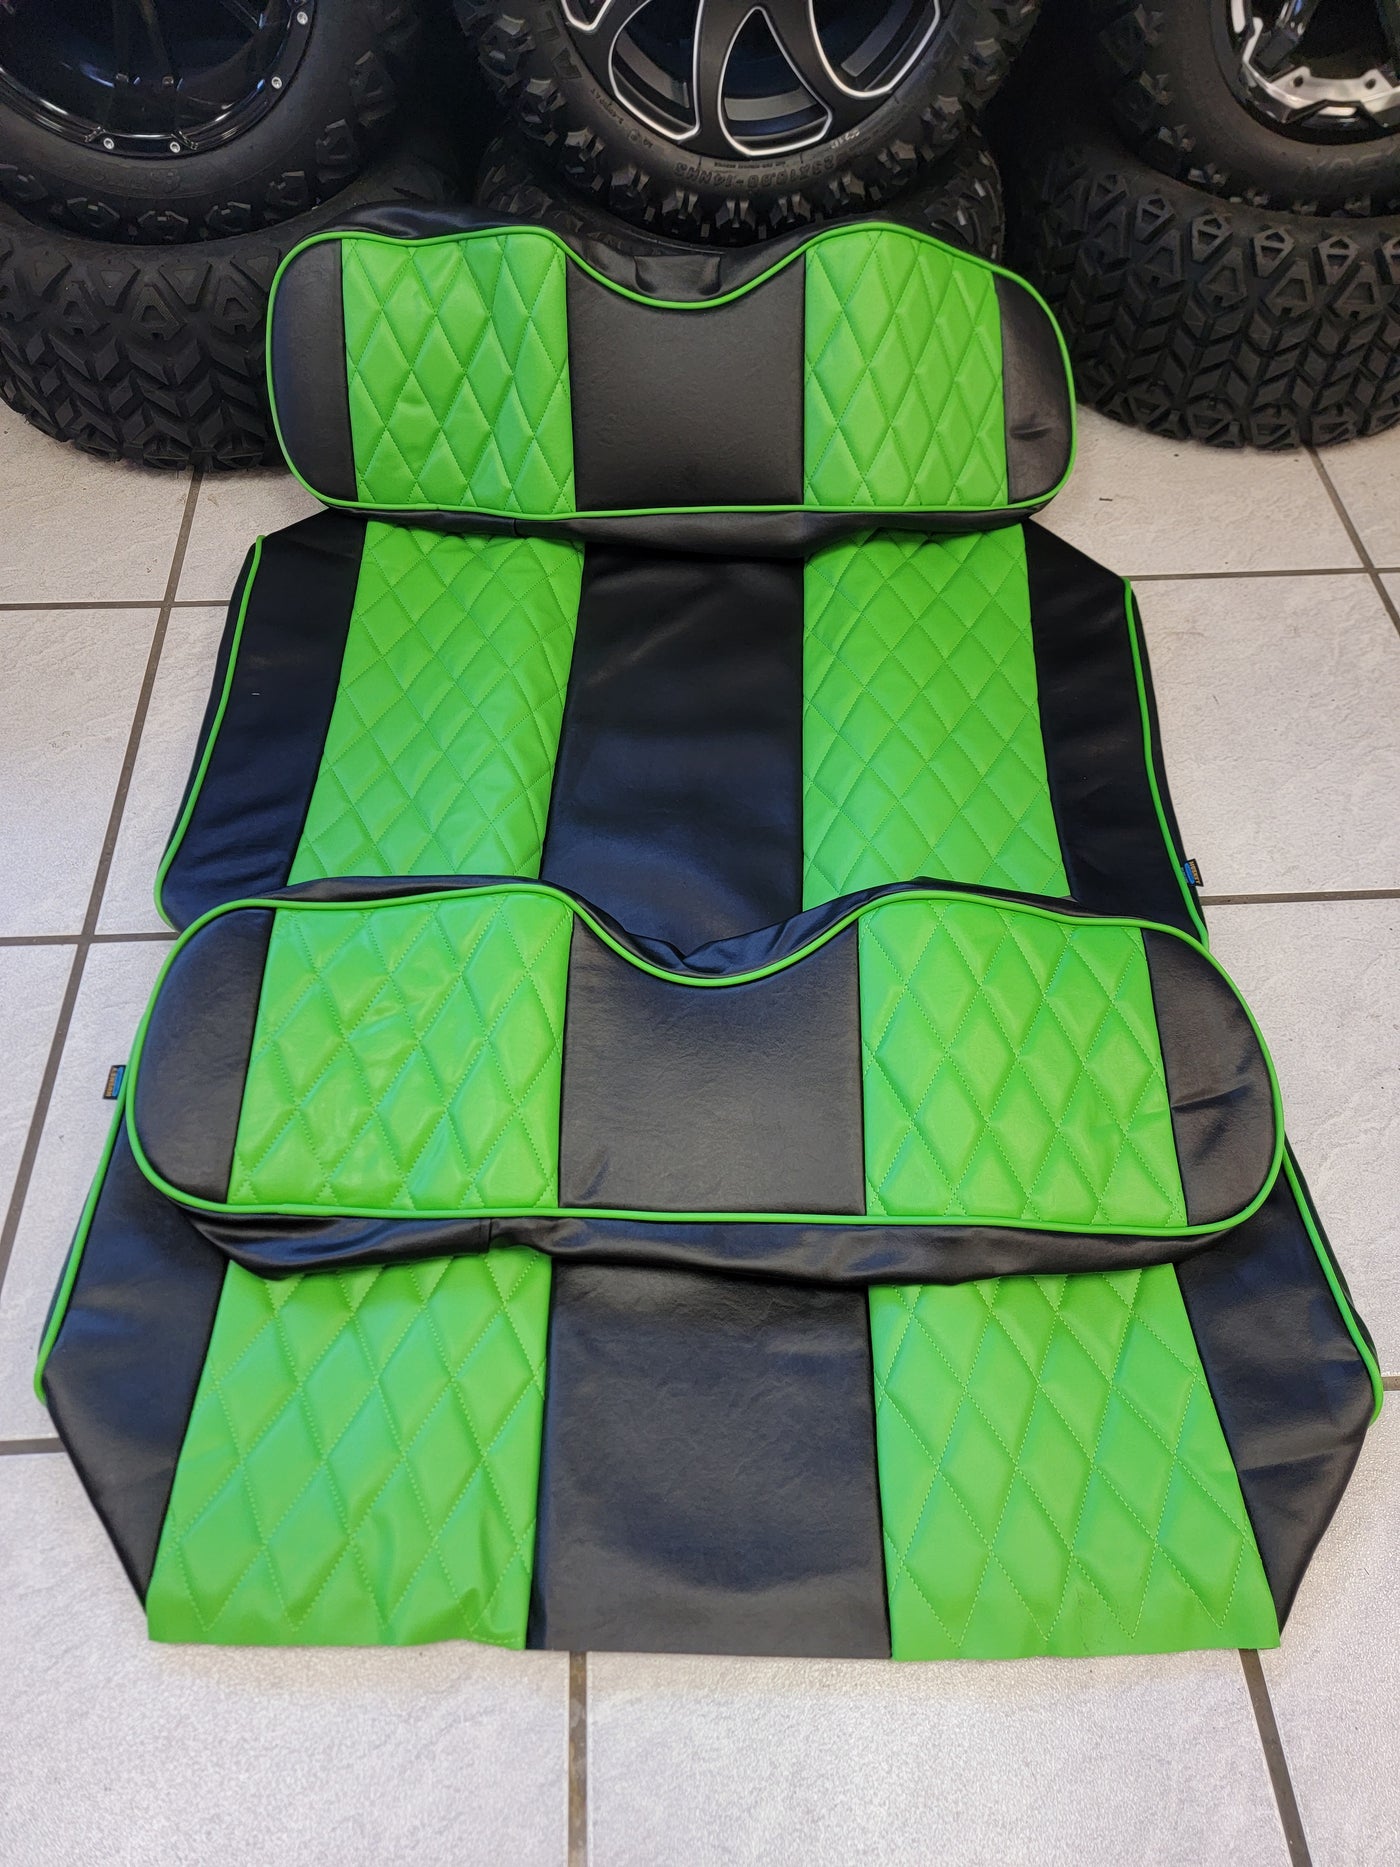 Custom Diamond Stich Black & Neon Green Seat Covers Fits Ez-Go (Ezgo) Txt/Rxv 1996-Current) or Club Car DS (2000-2013)